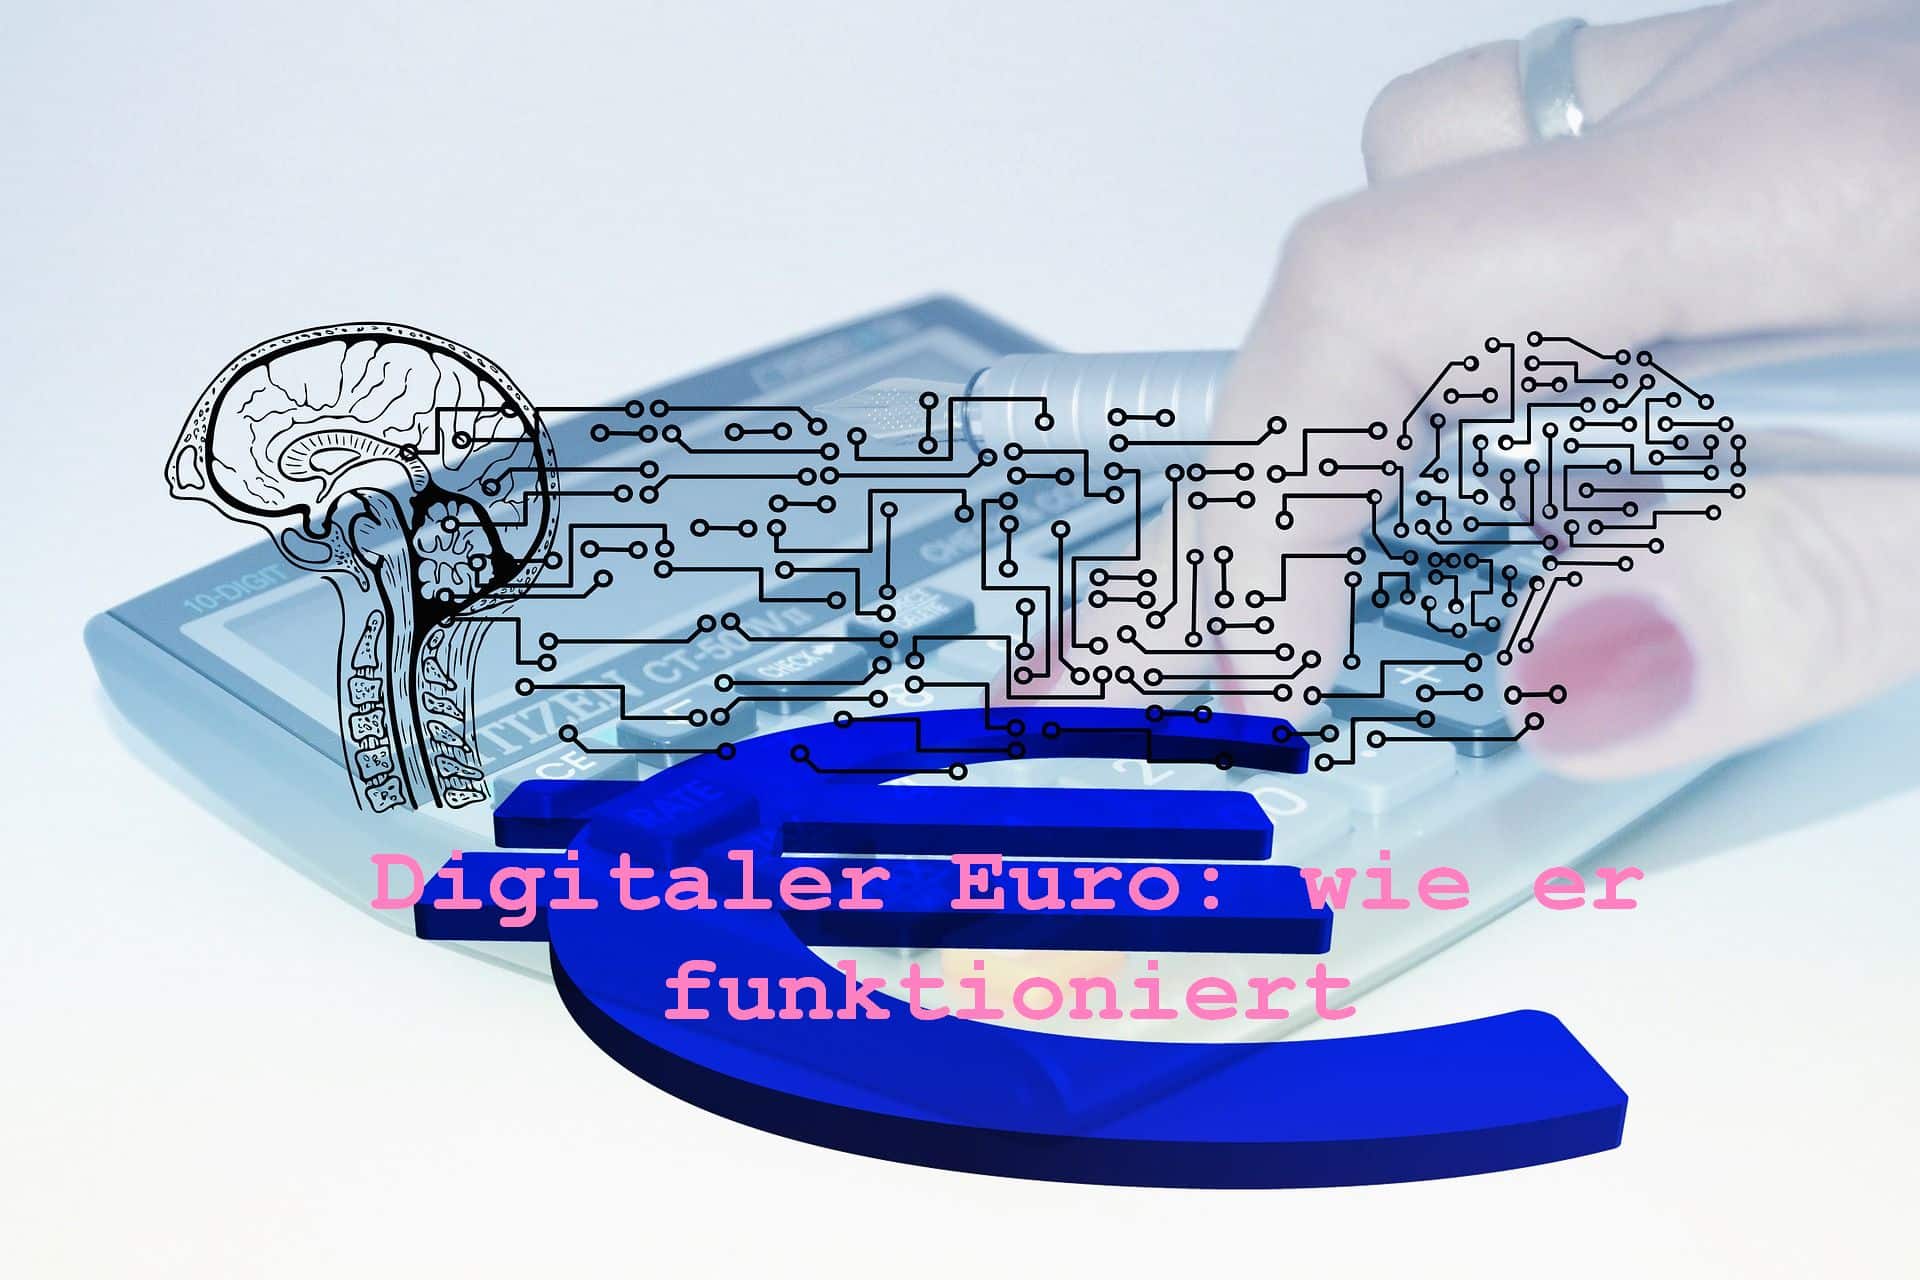 Bürger & Geld: Digitaler Euro auf dem Weg – wie er funktioniert